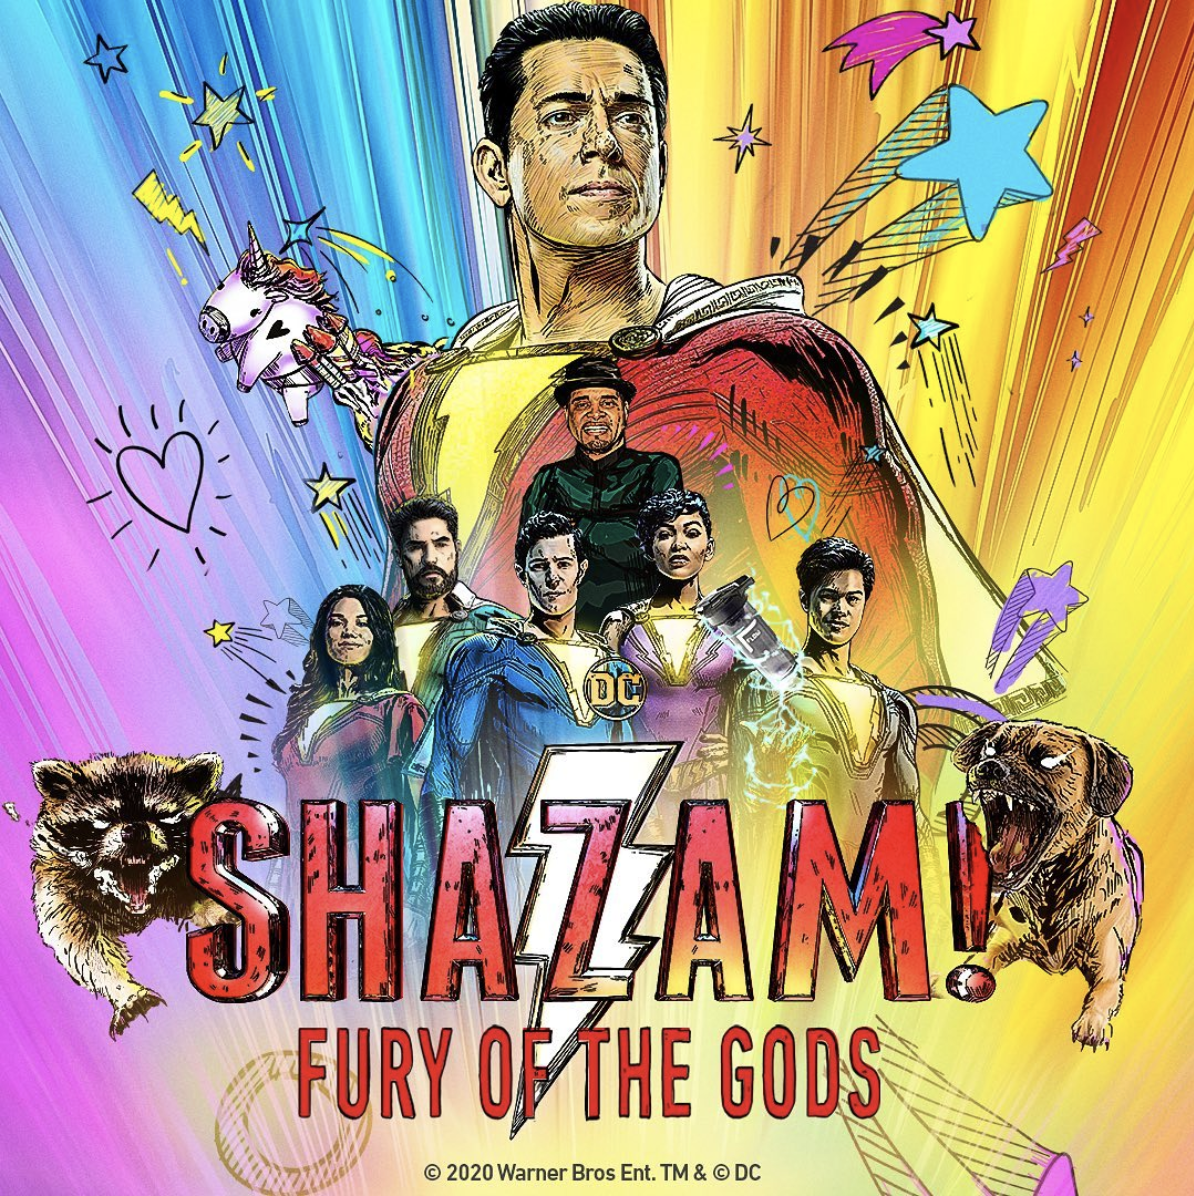 Zachary Levi Shares Poster Art For SHAZAM! FURY OF THE GODS